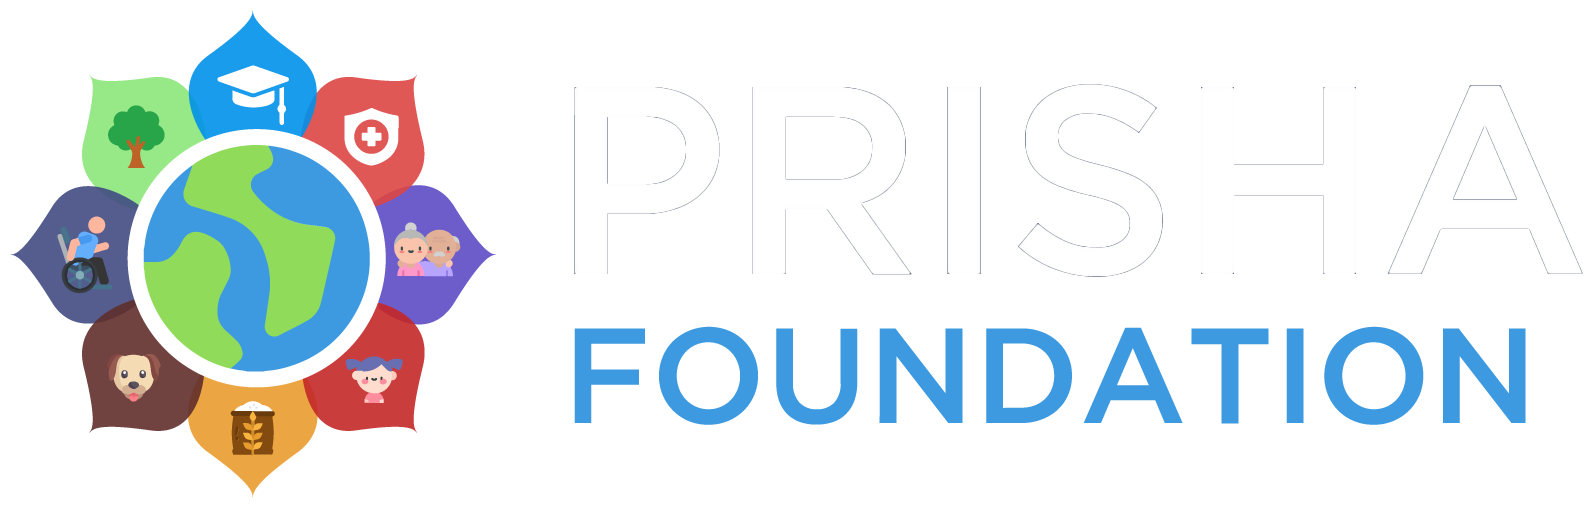 Prisha-footer-logo